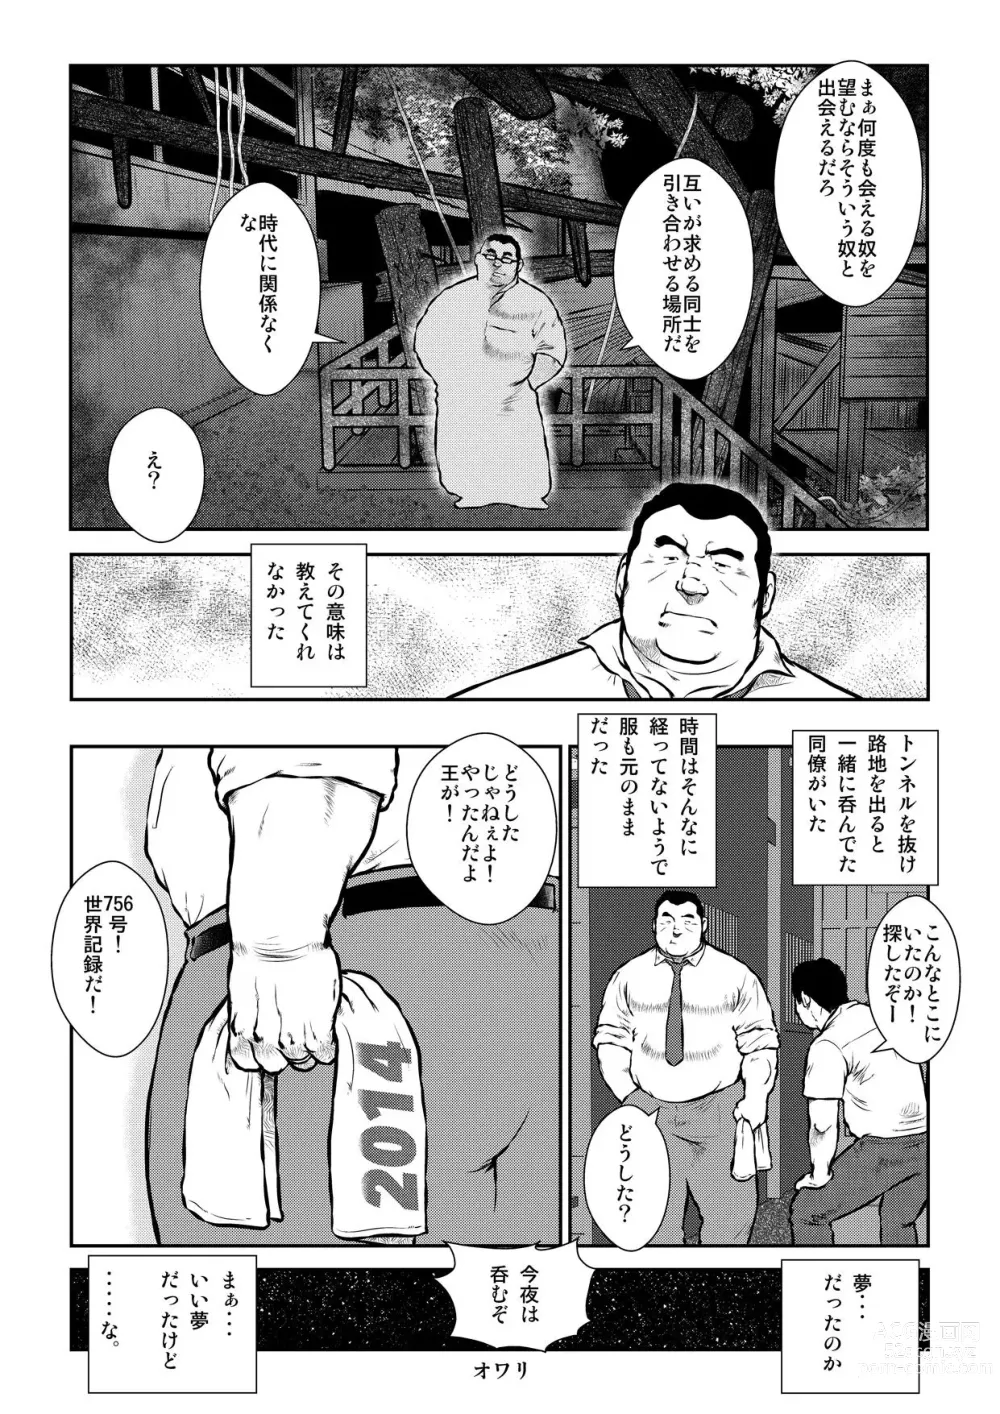 Page 18 of doujinshi Anaba